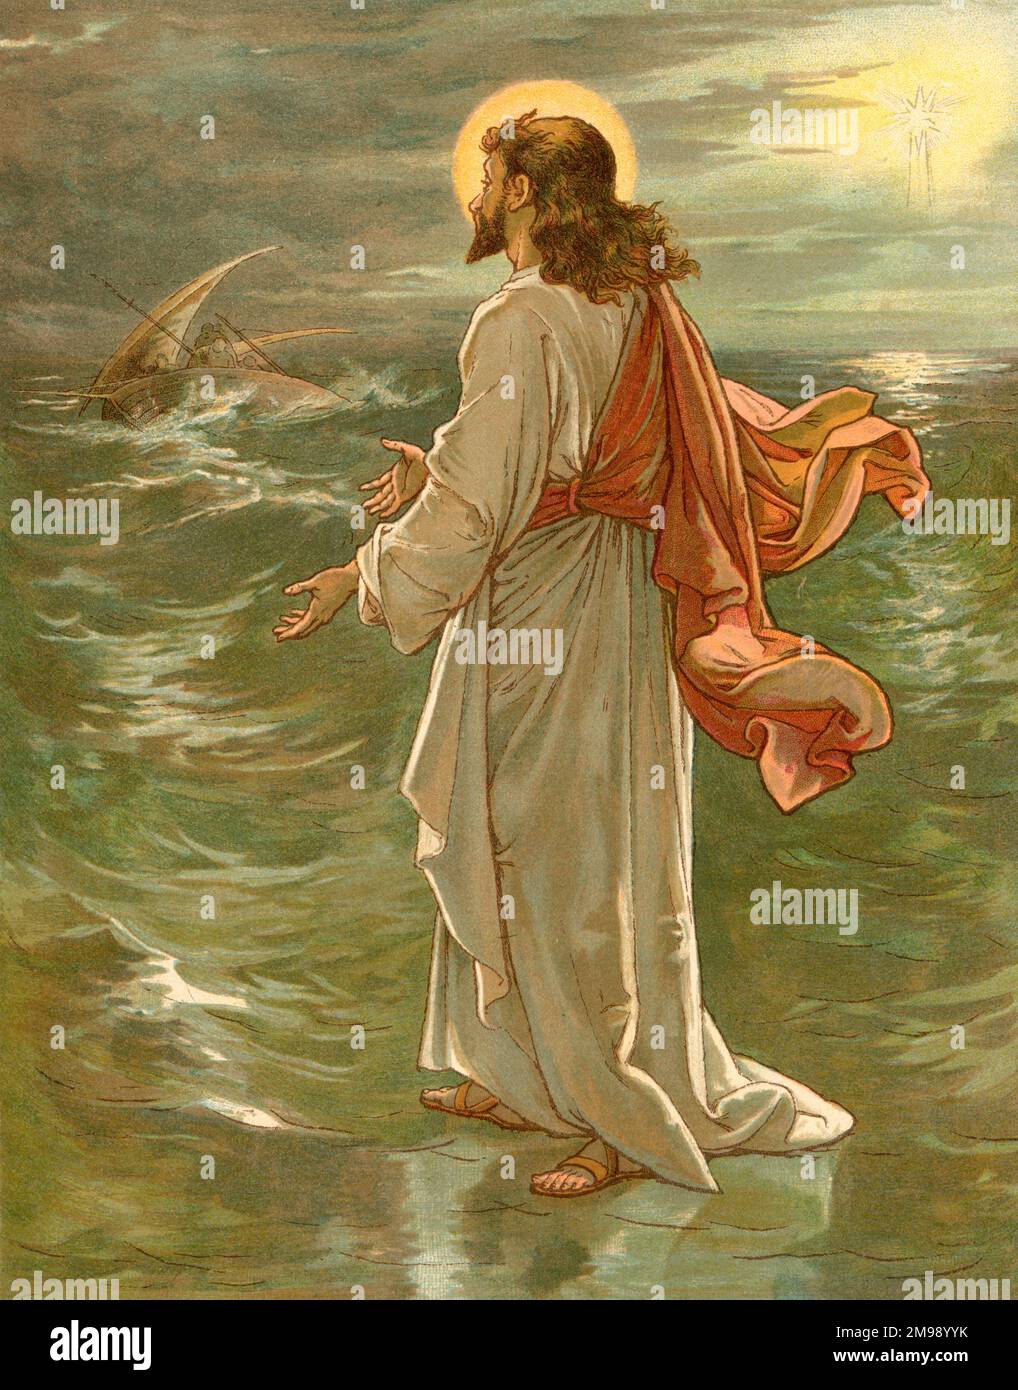 Biblical Tales by John Lawson, Jesus Walks on Water. Stock Photo